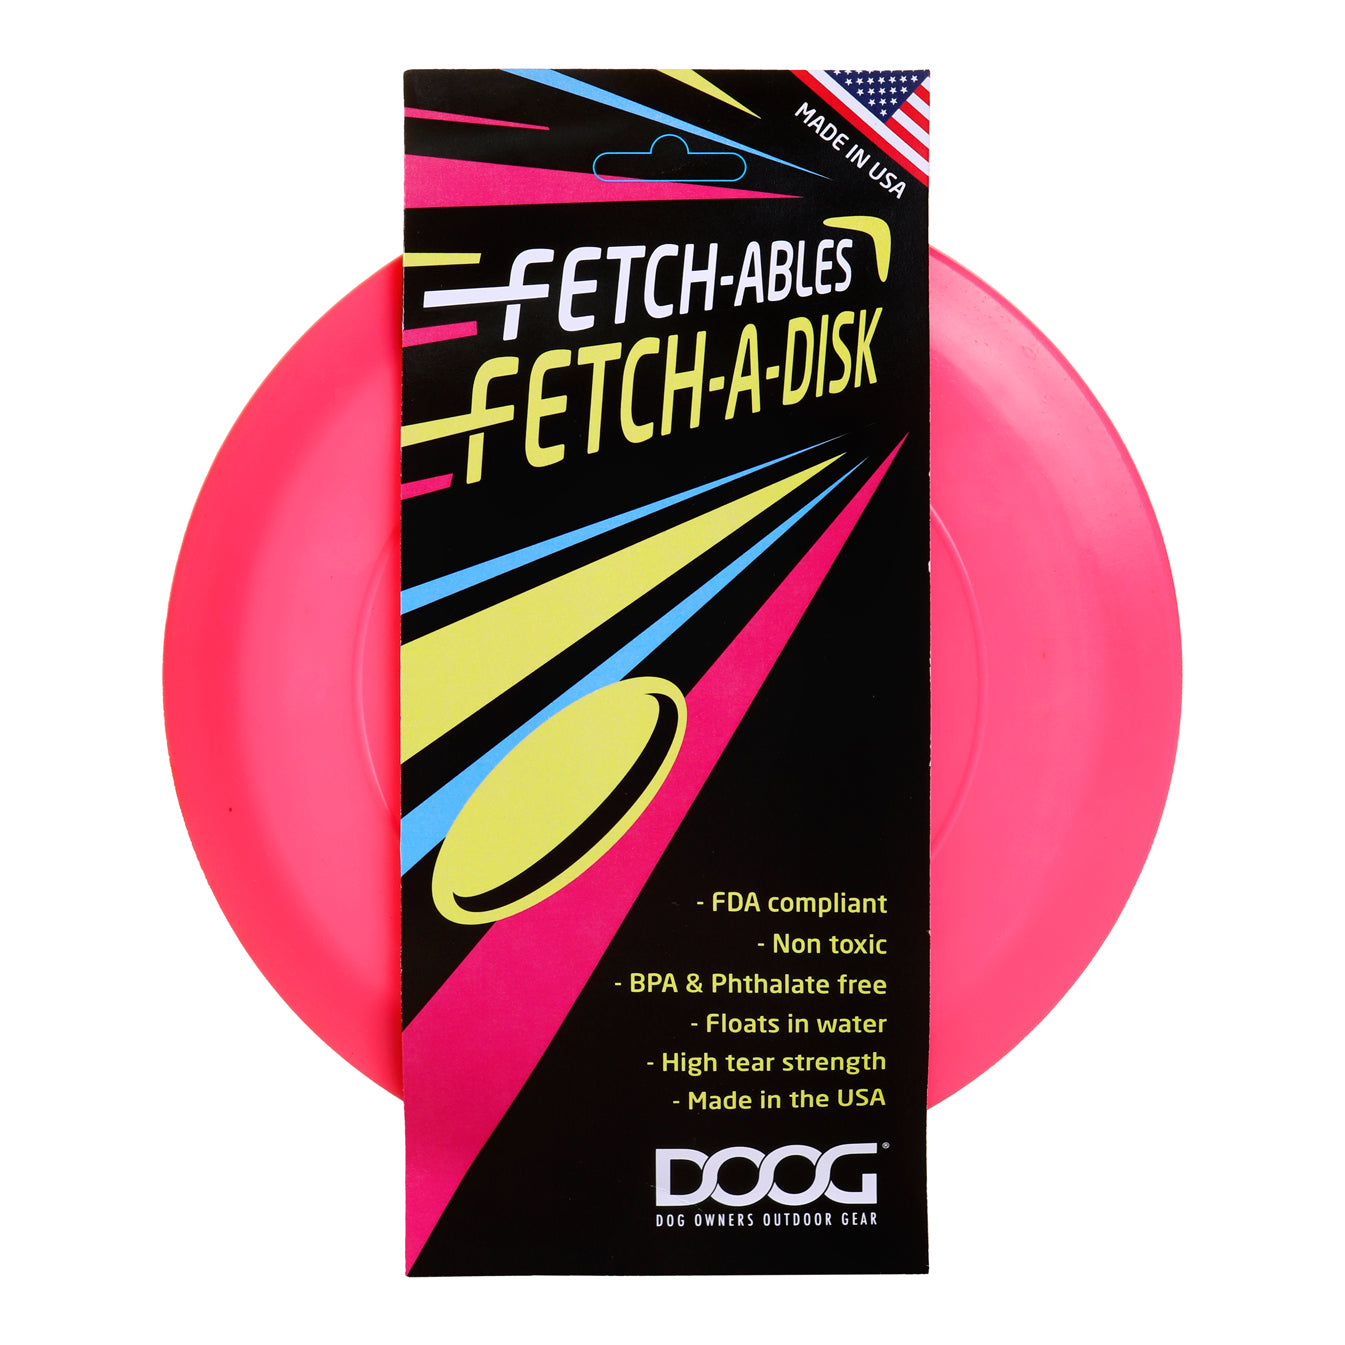 Fetch-Ables - Fetch-A-Disk